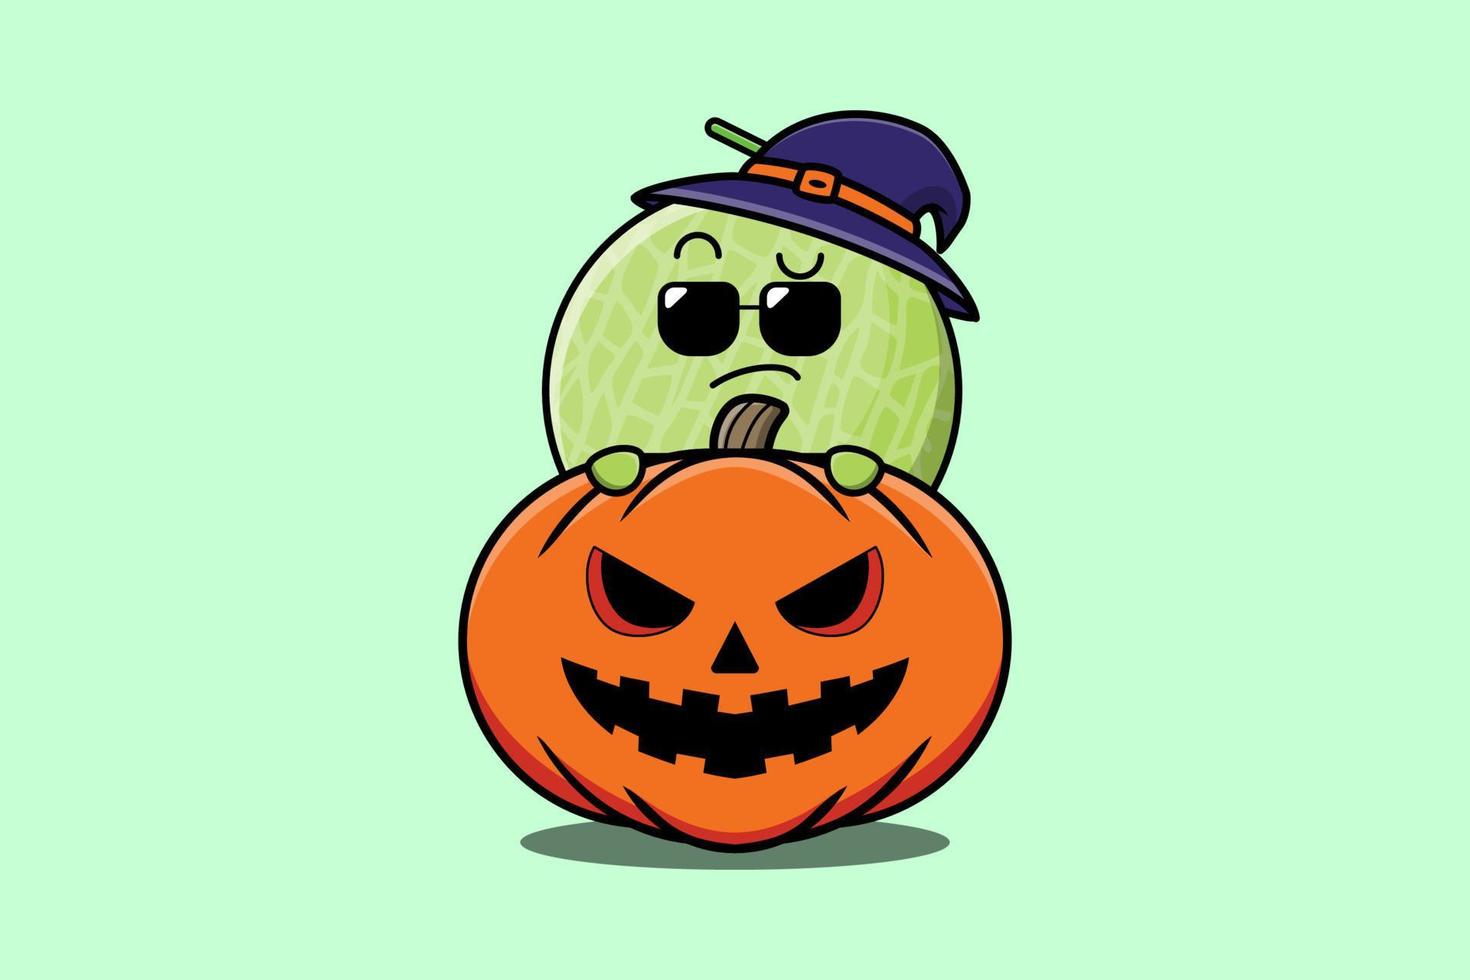 Cute Melon cartoon character hiding in pumpkin vector